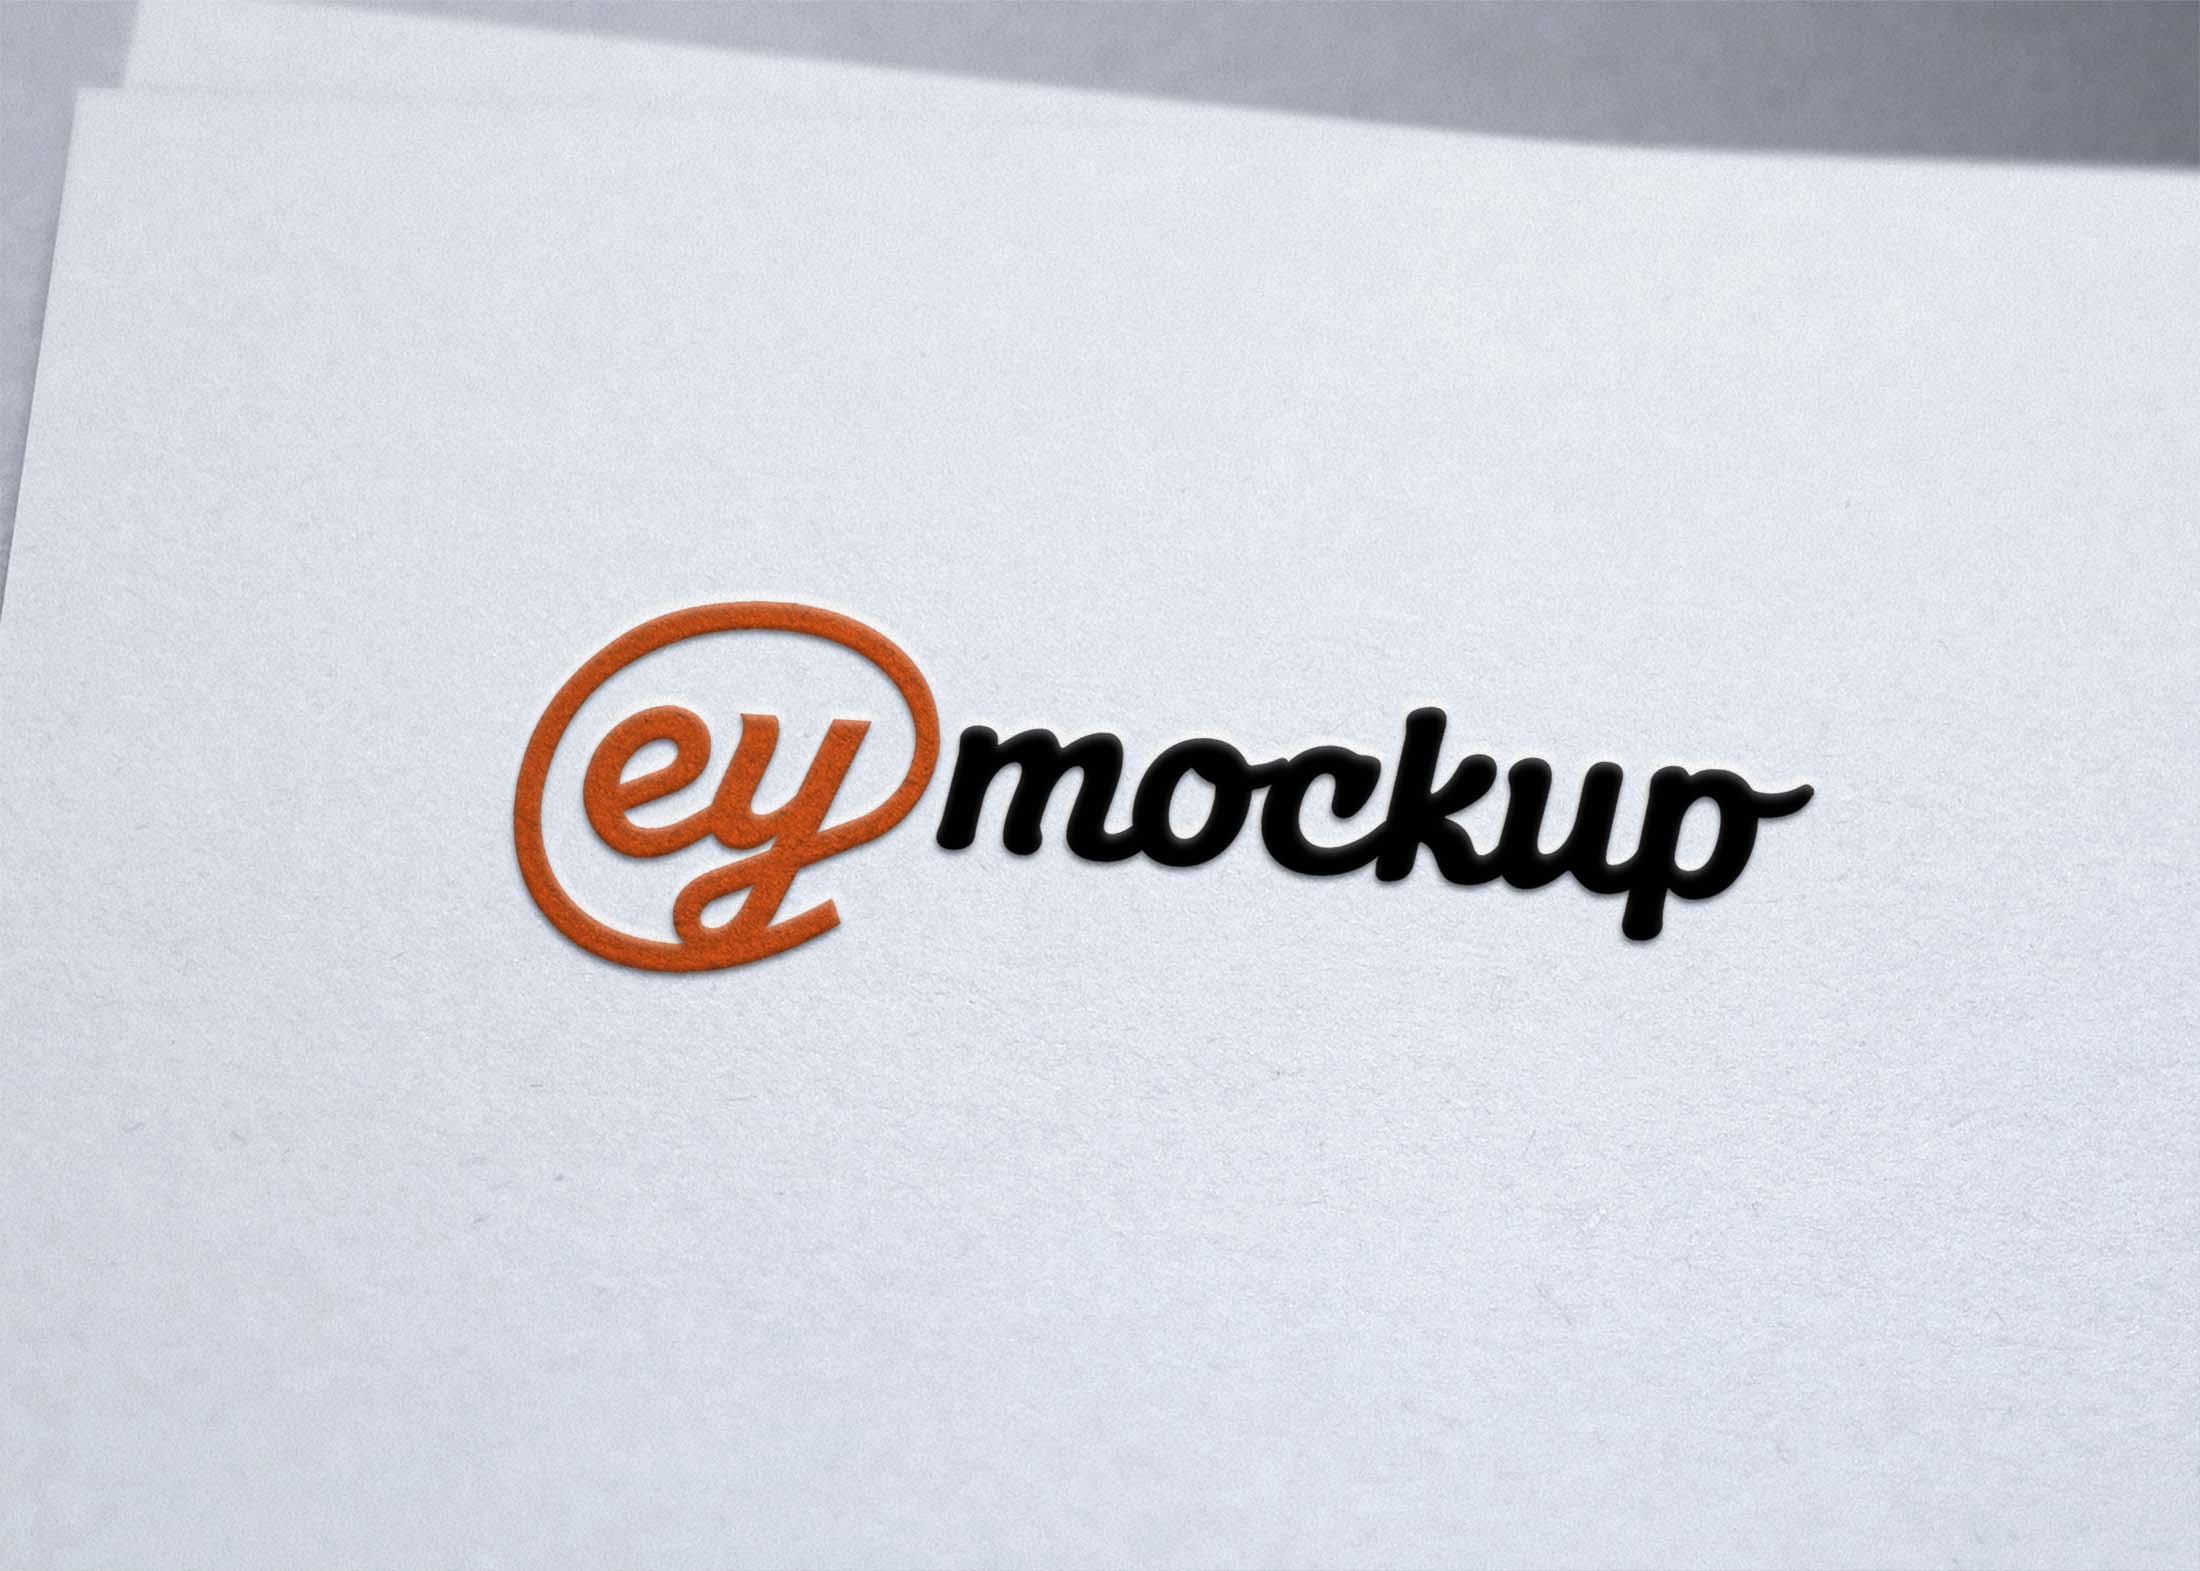 eymockup Realistic Embross Logo Mockup